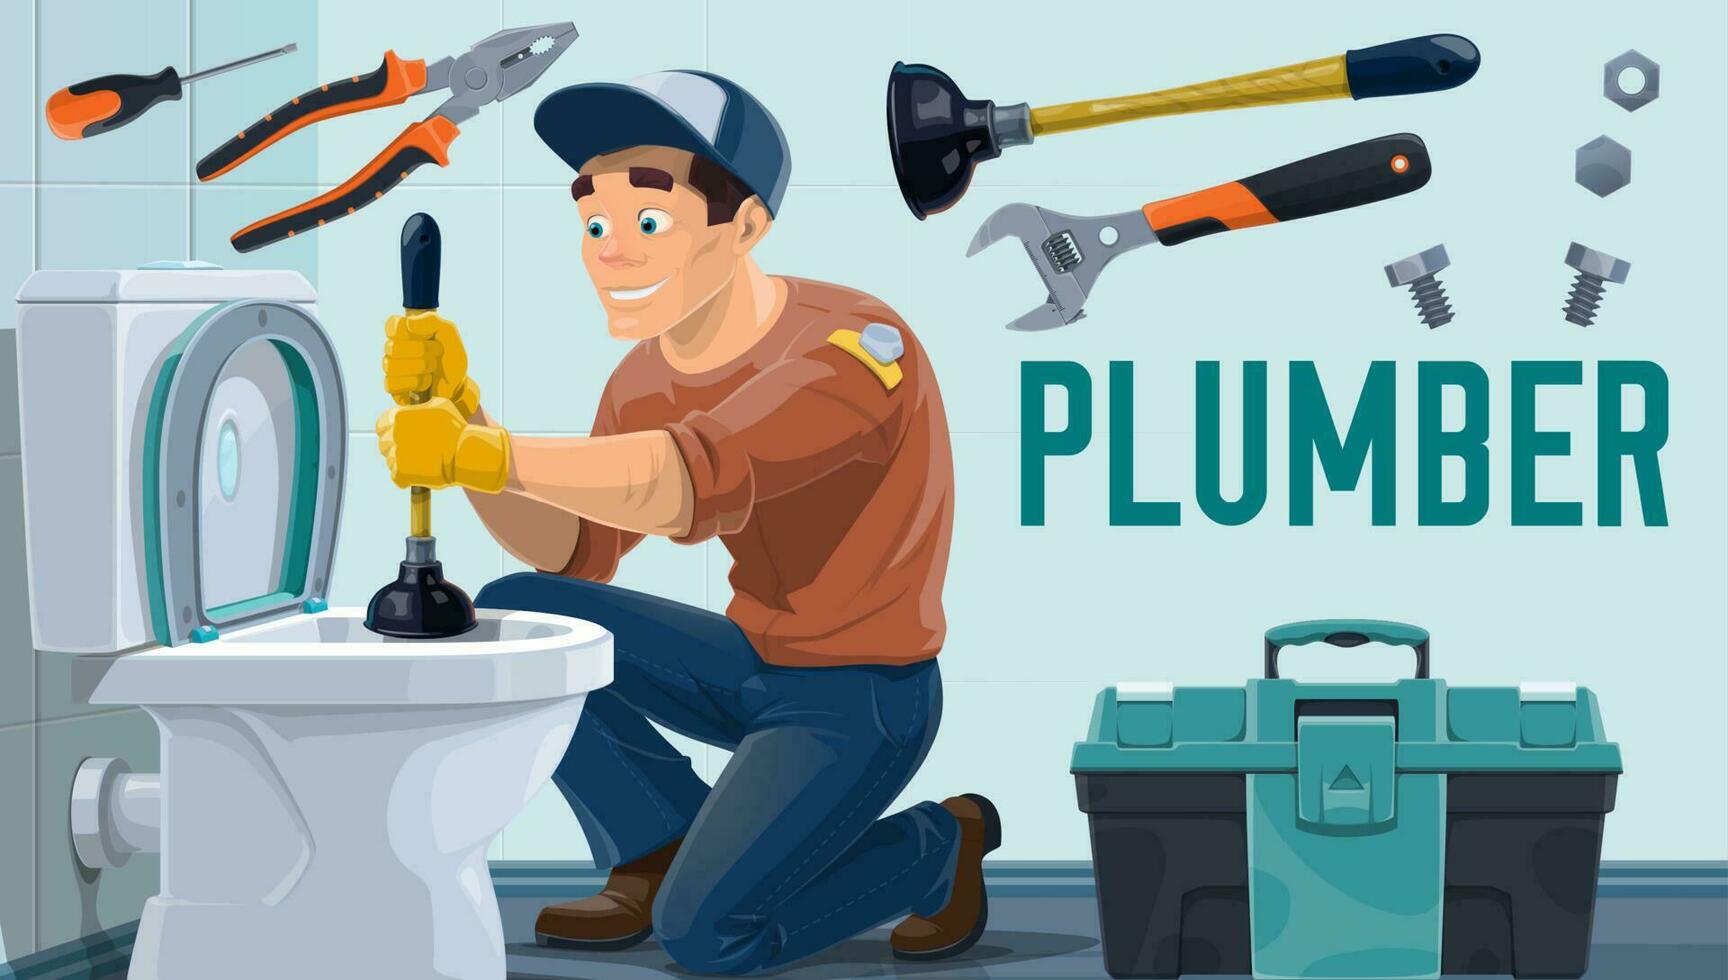 Plumber worker, toilet repair, water plumbing vector